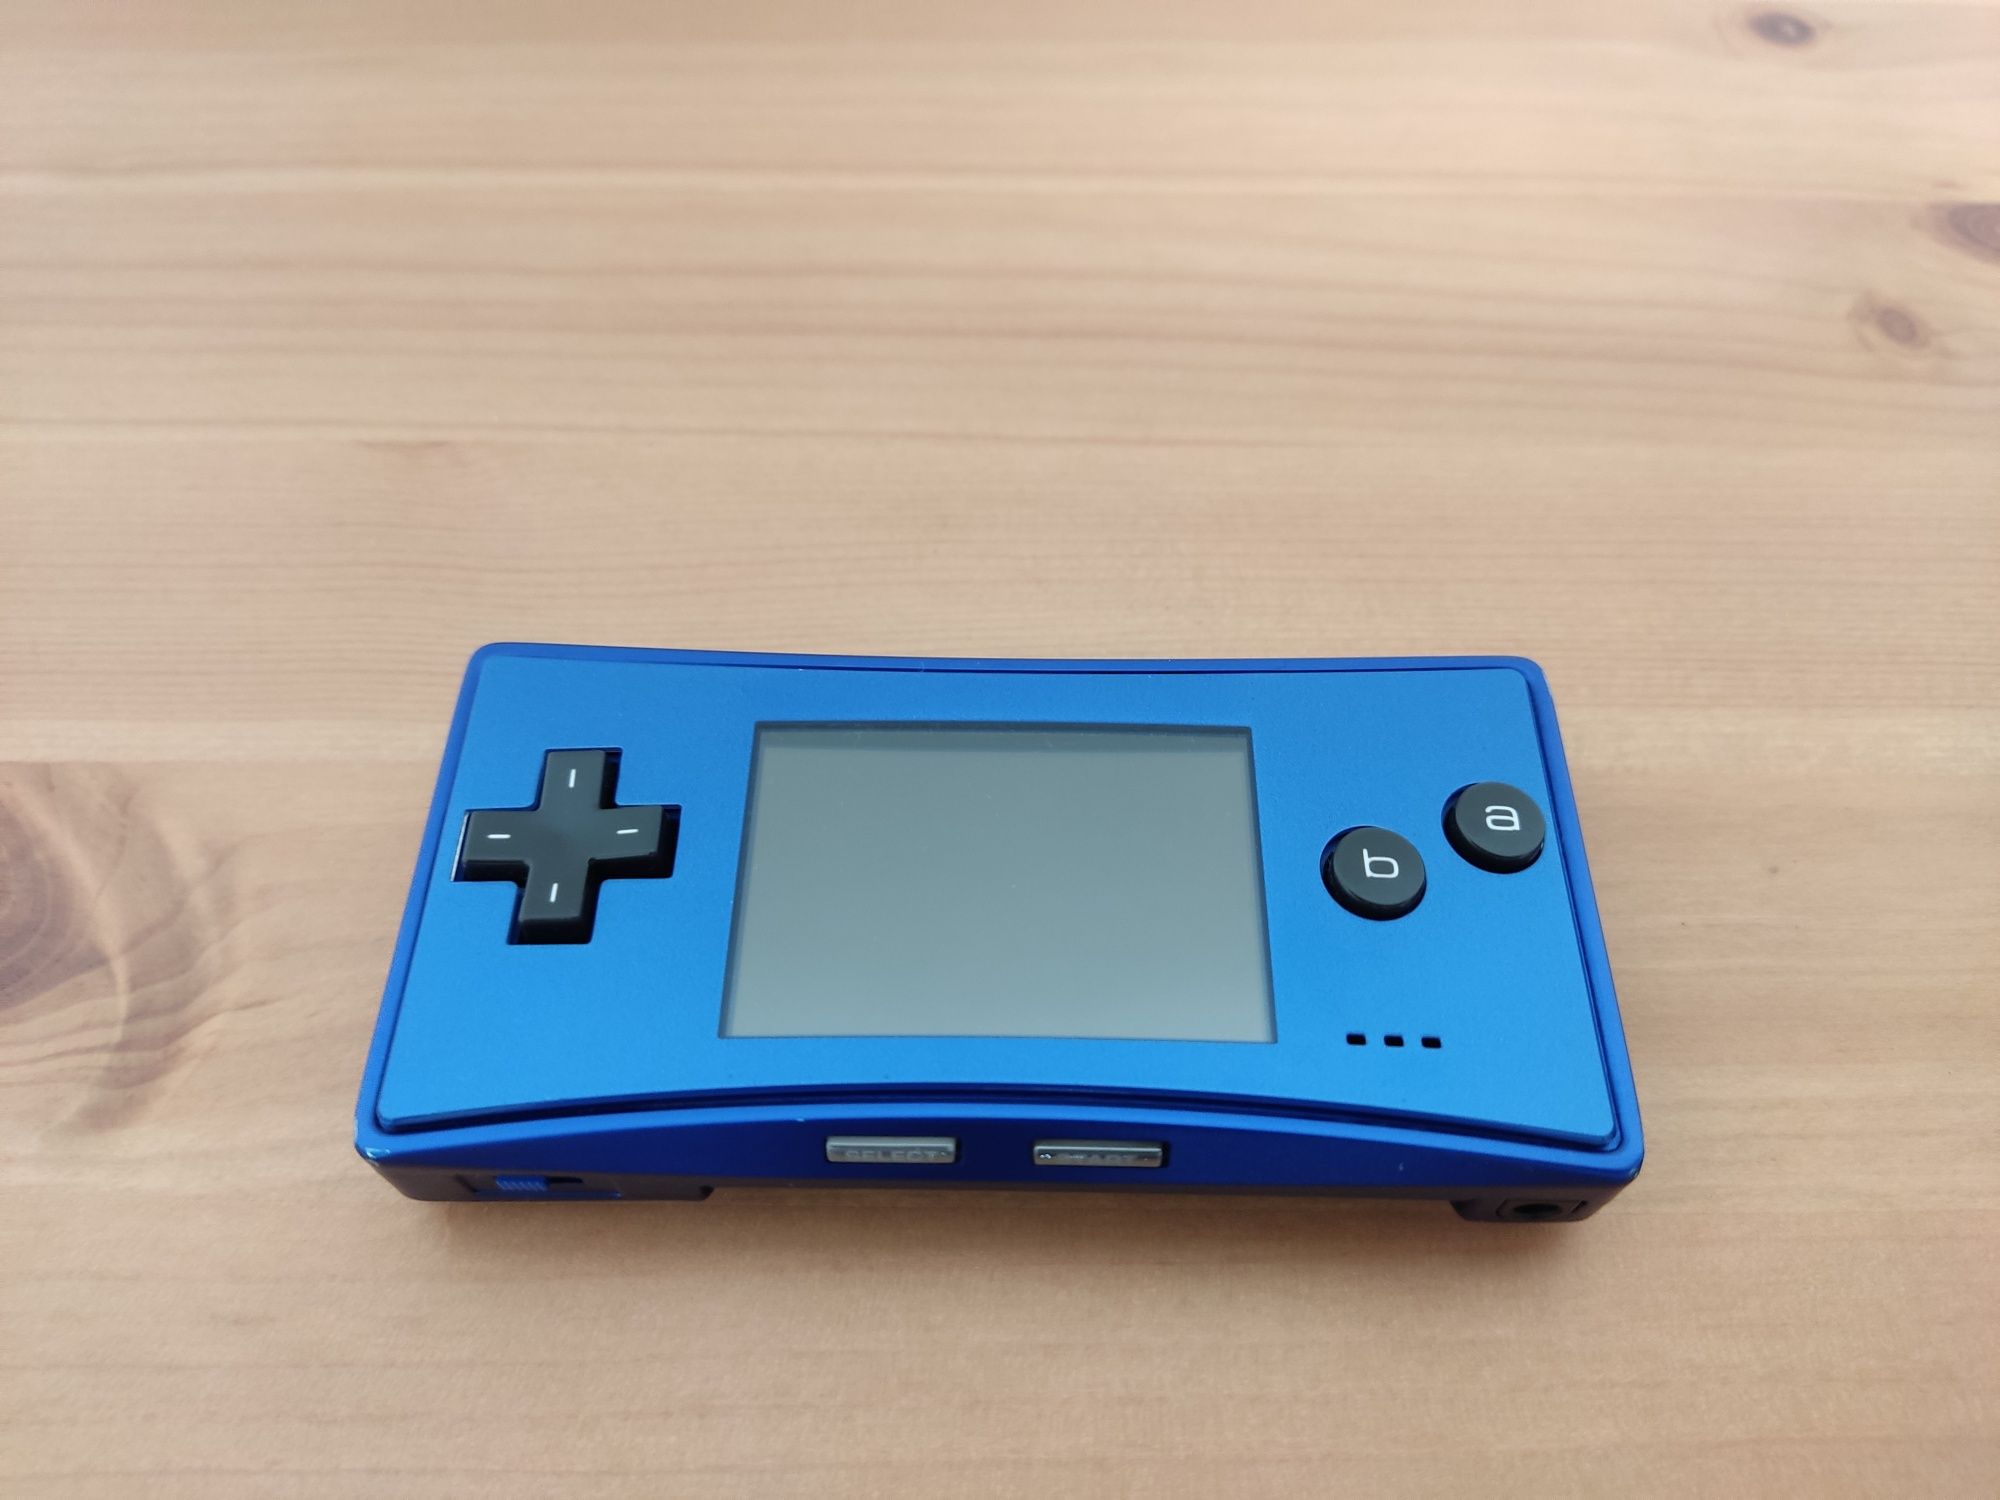 Consola Game Boy Micro azul com bolsa